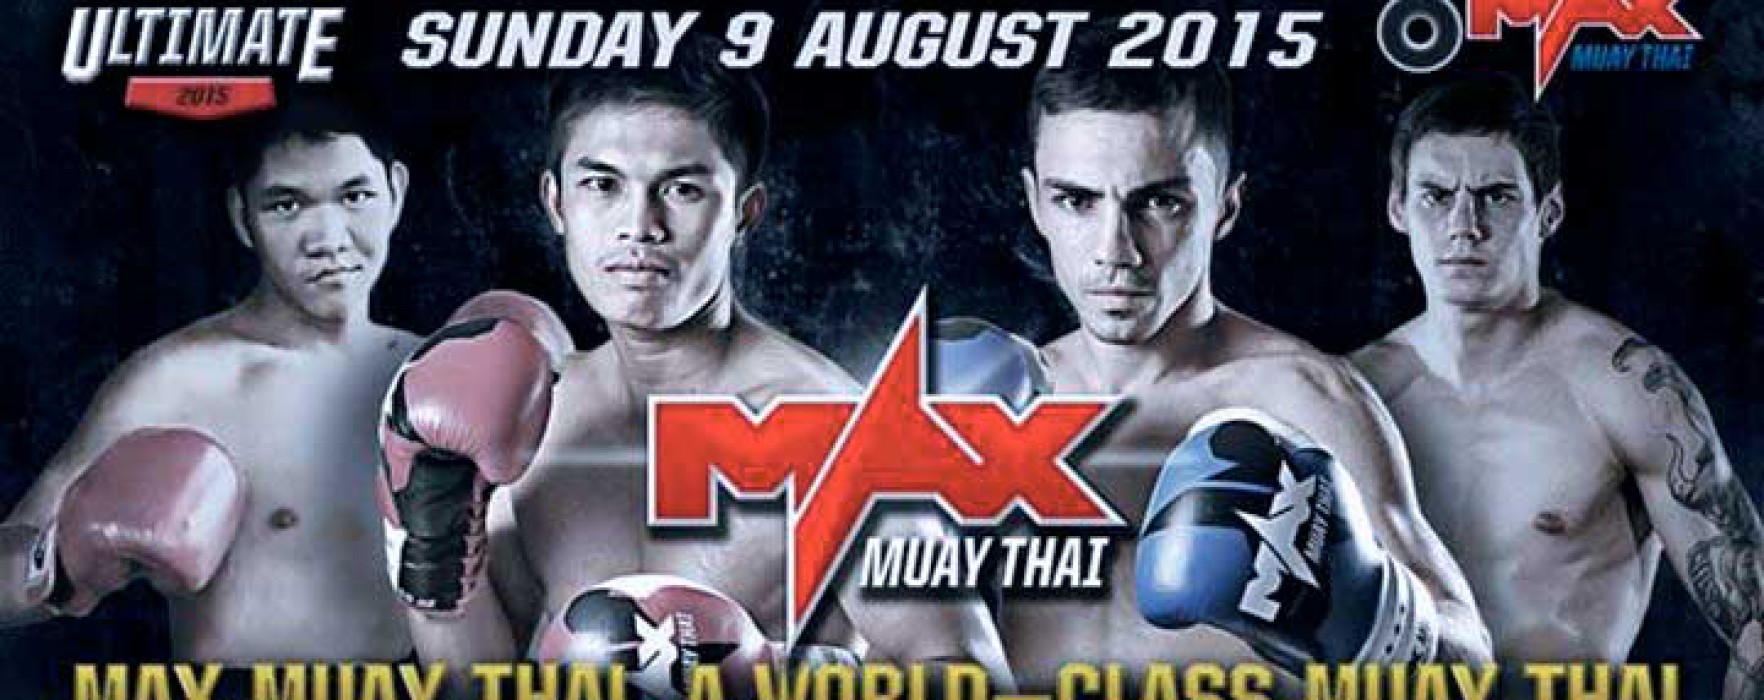 Flash News: Toby Smith and Juan Mario Kaewsamrit at Max Muay Thai – 9th August 2015